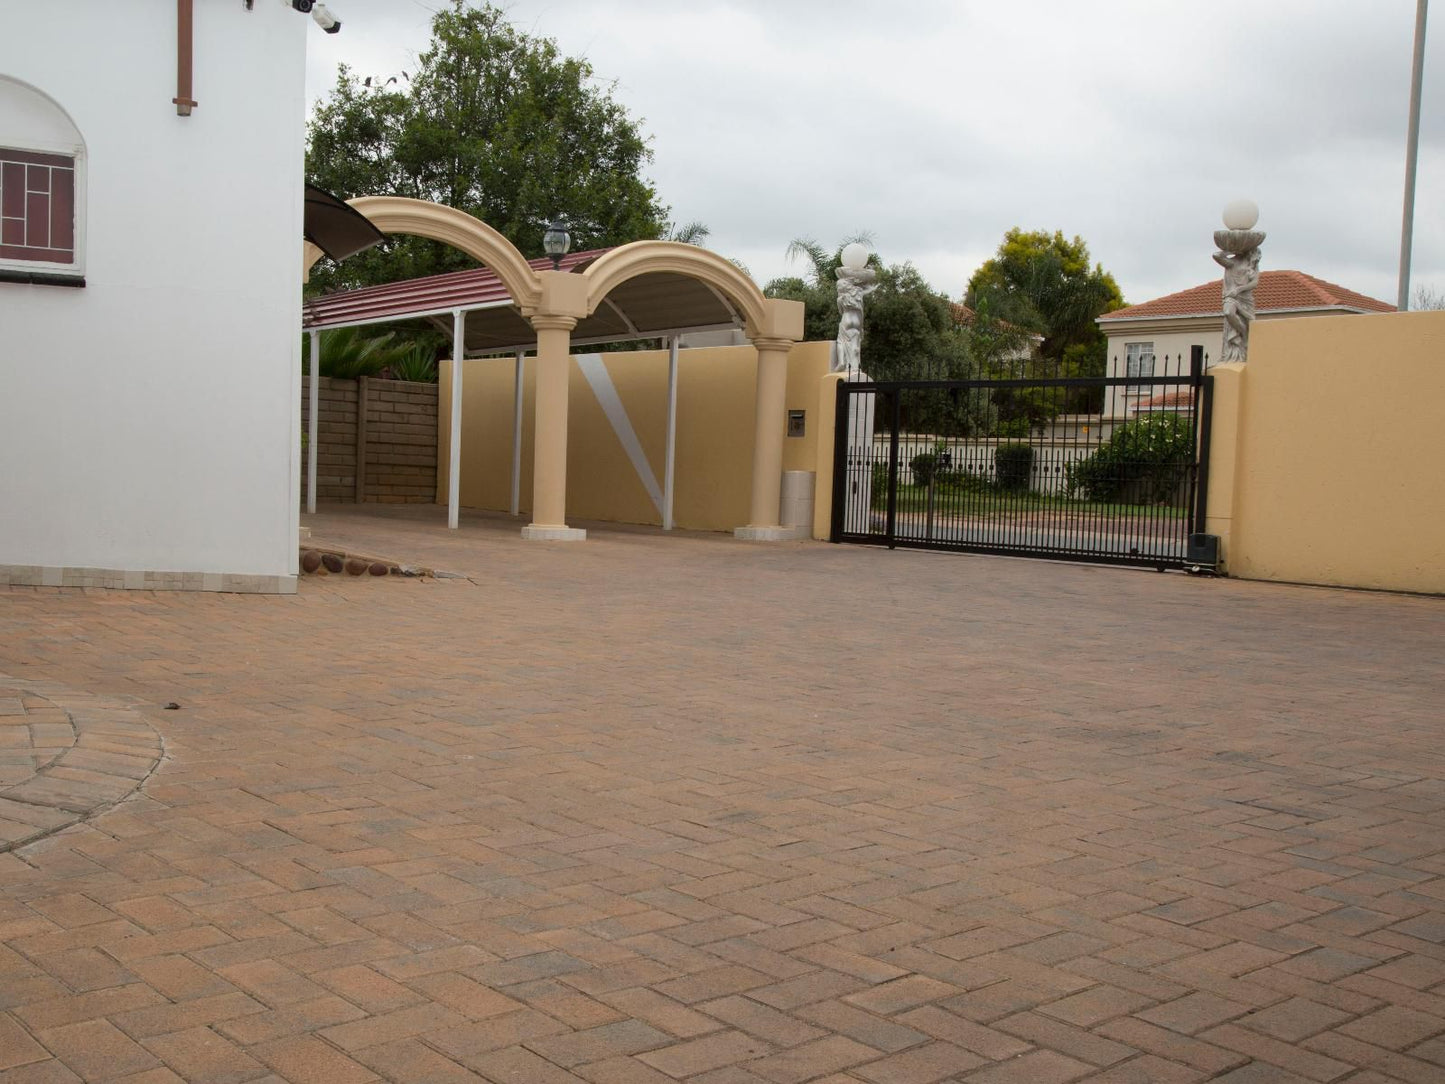 Xaviera Guest House Garsfontein Pretoria Tshwane Gauteng South Africa House, Building, Architecture